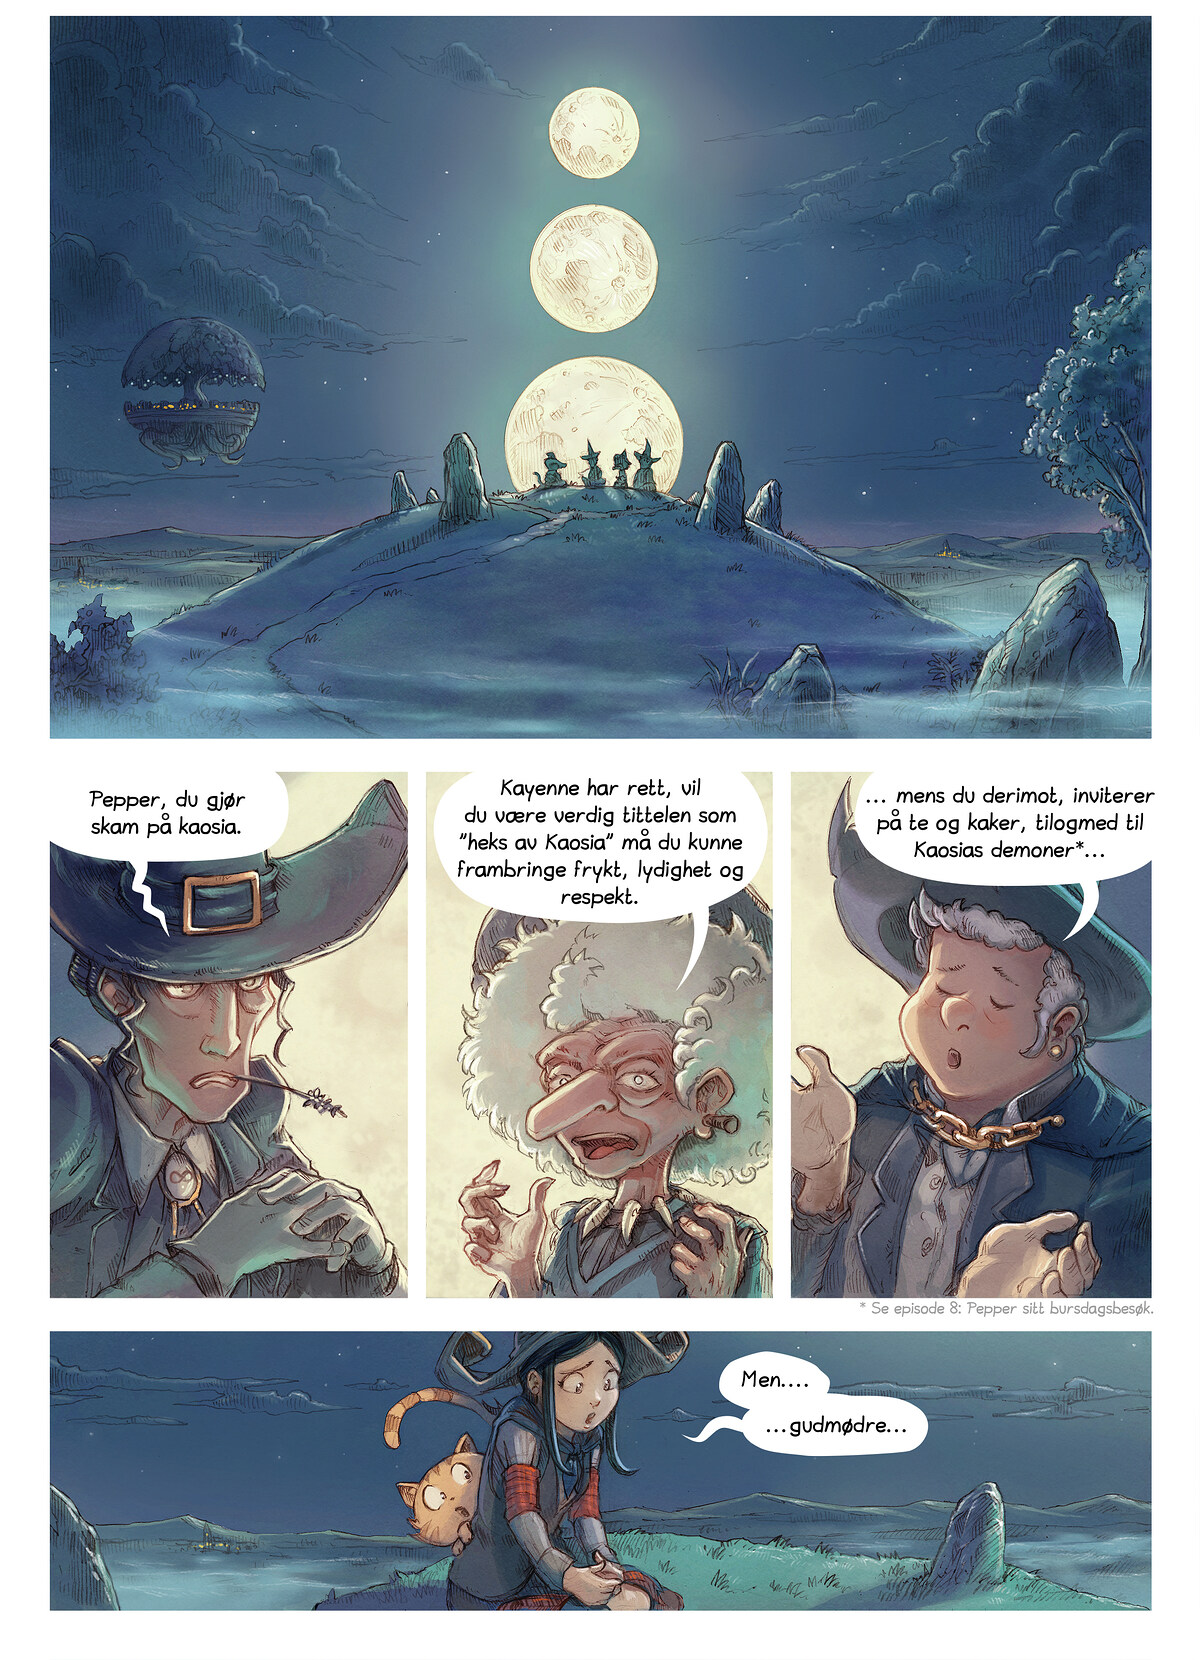 Episode 11: Kaosias hekser, Page 1